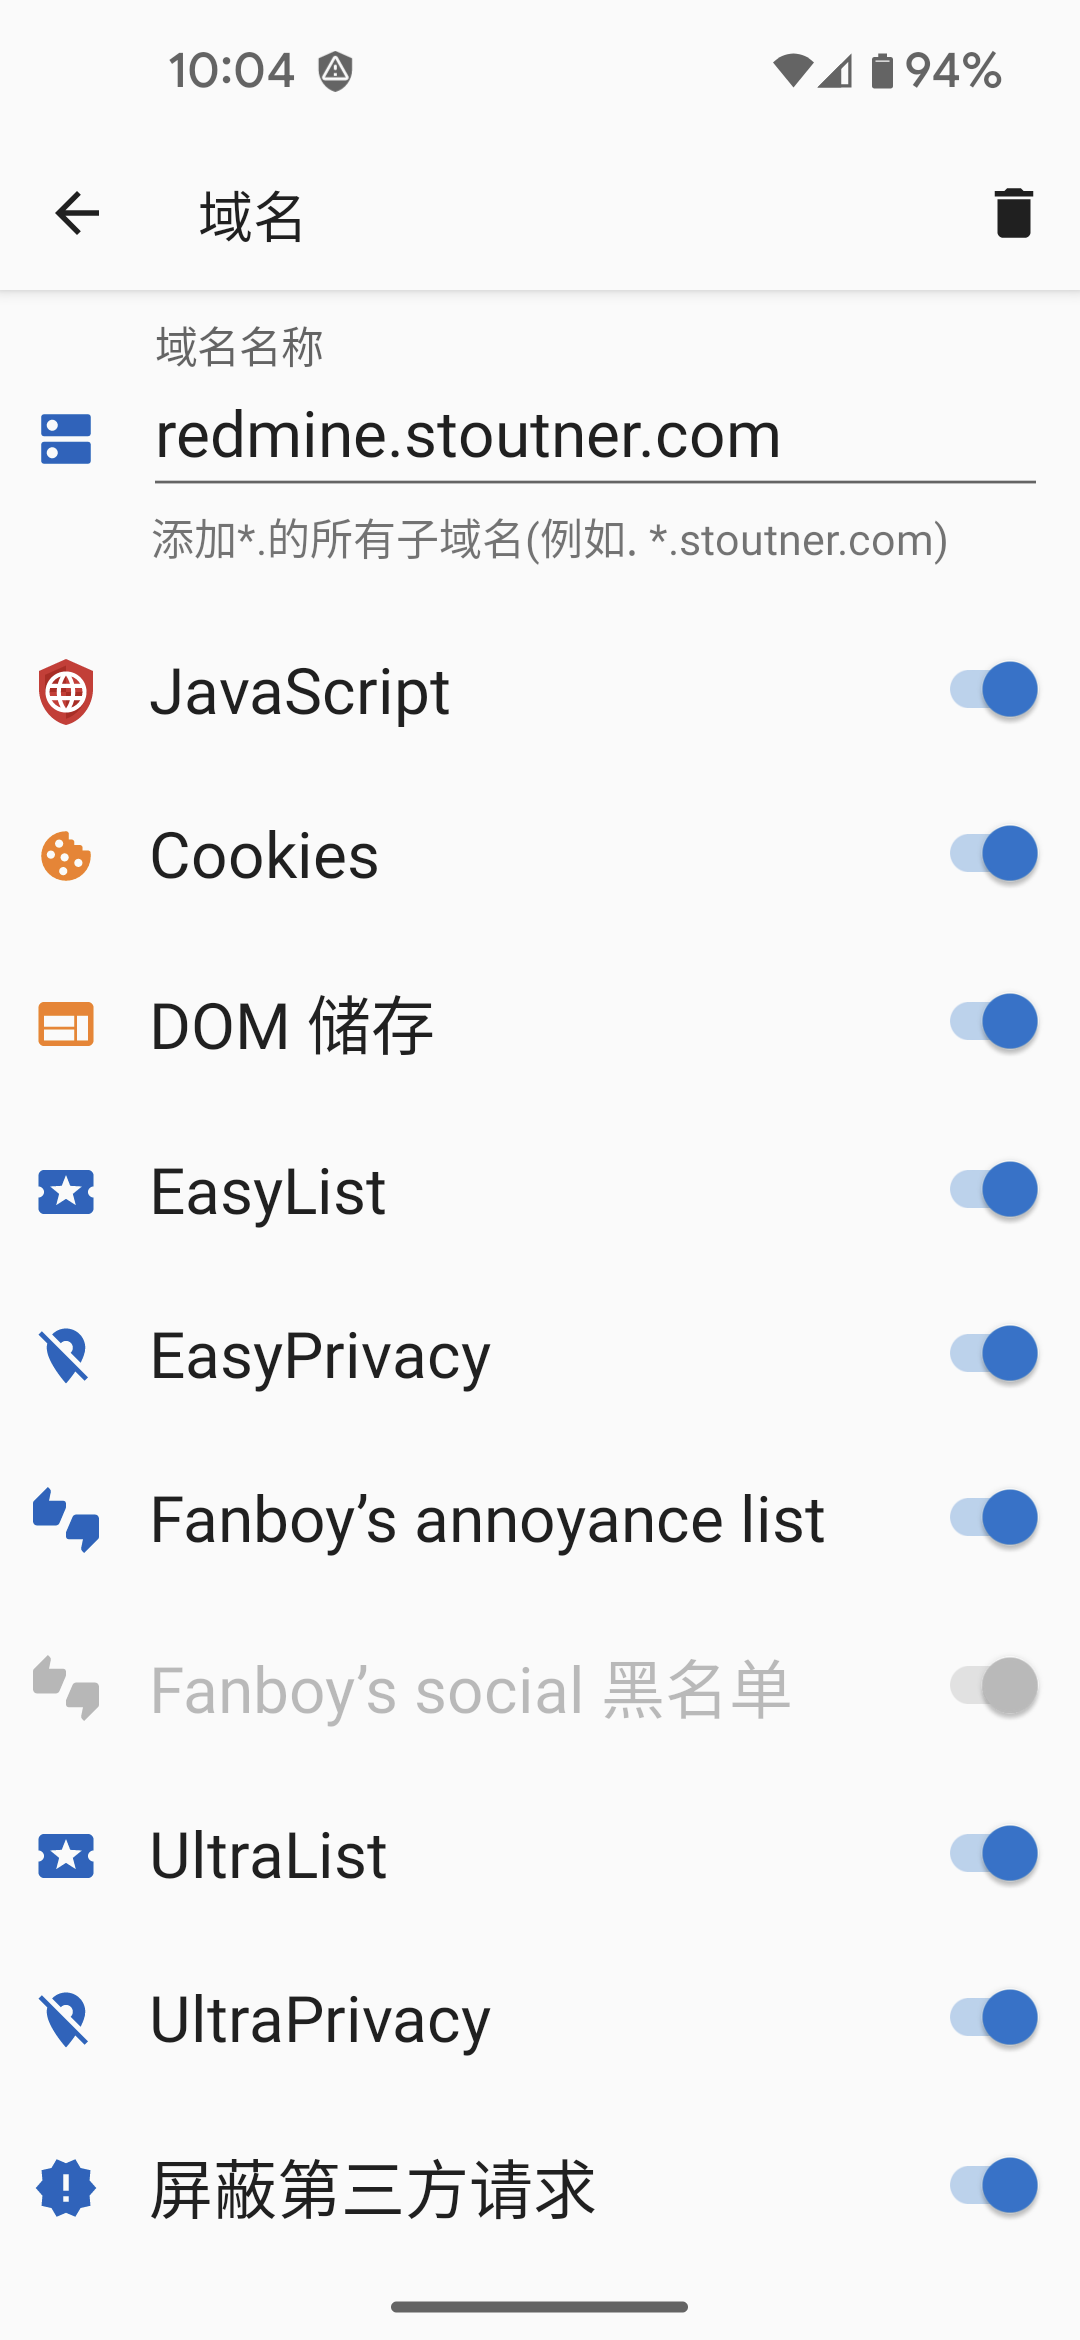 fastlane/metadata/android/zh-CN/images/phoneScreenshots/07-Domains.png